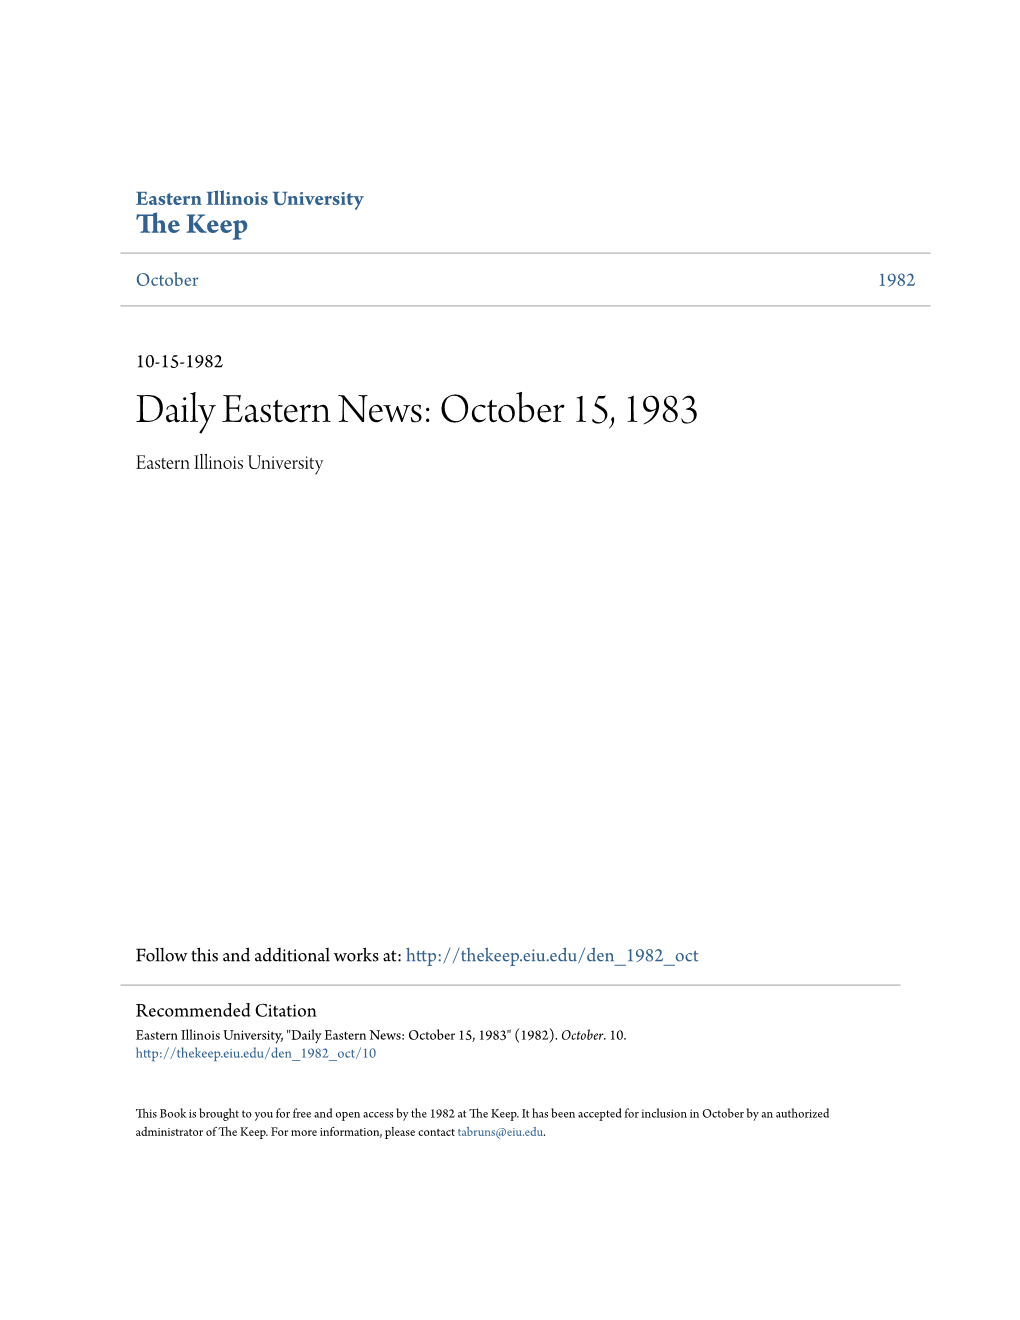 Daily Eastern News: October 15, 1983 Eastern Illinois University